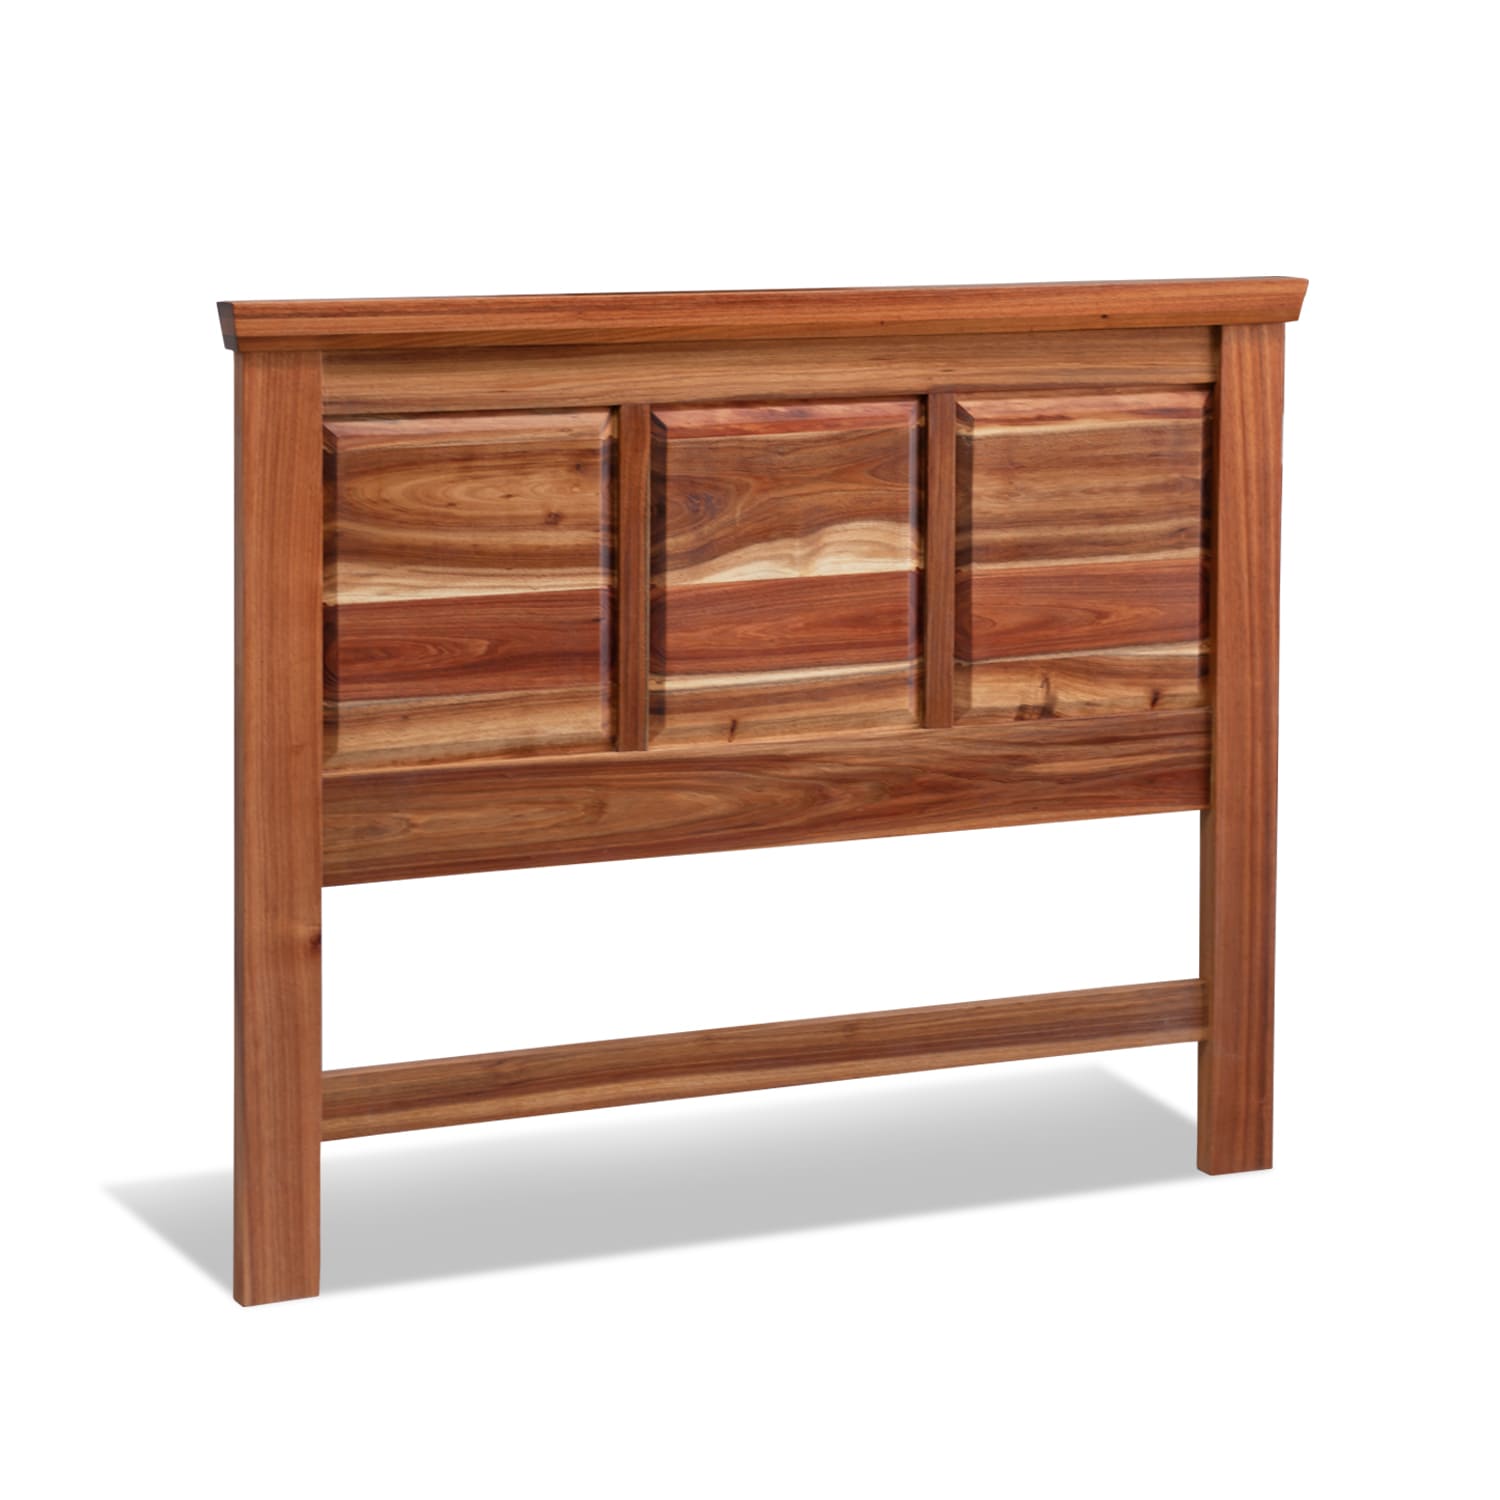 Kingston Headboard - Quality Solid Wood Furniture Headboards